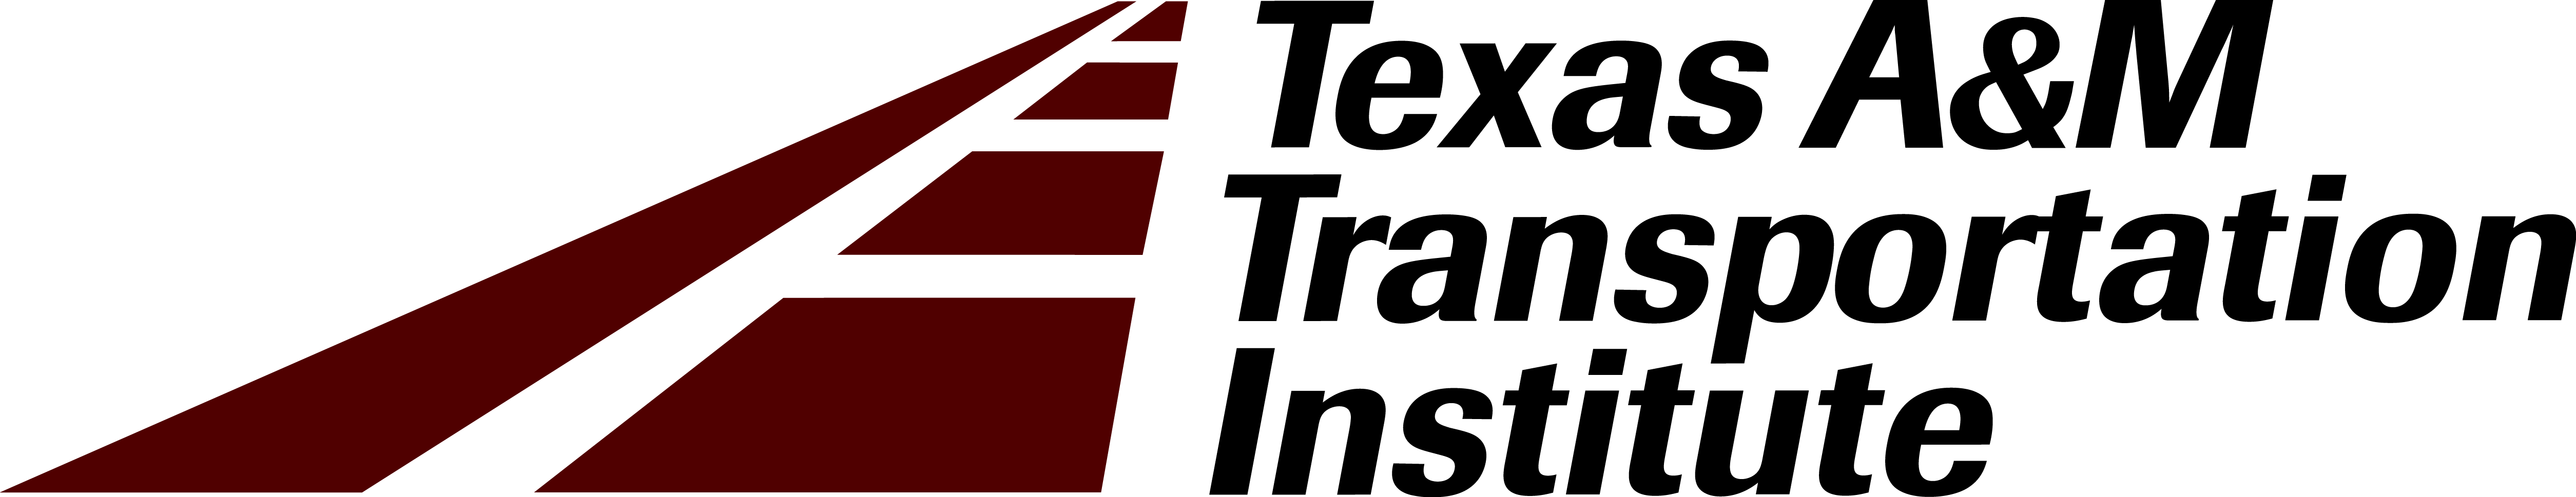 Texas A&M Transportation Institute (logo)